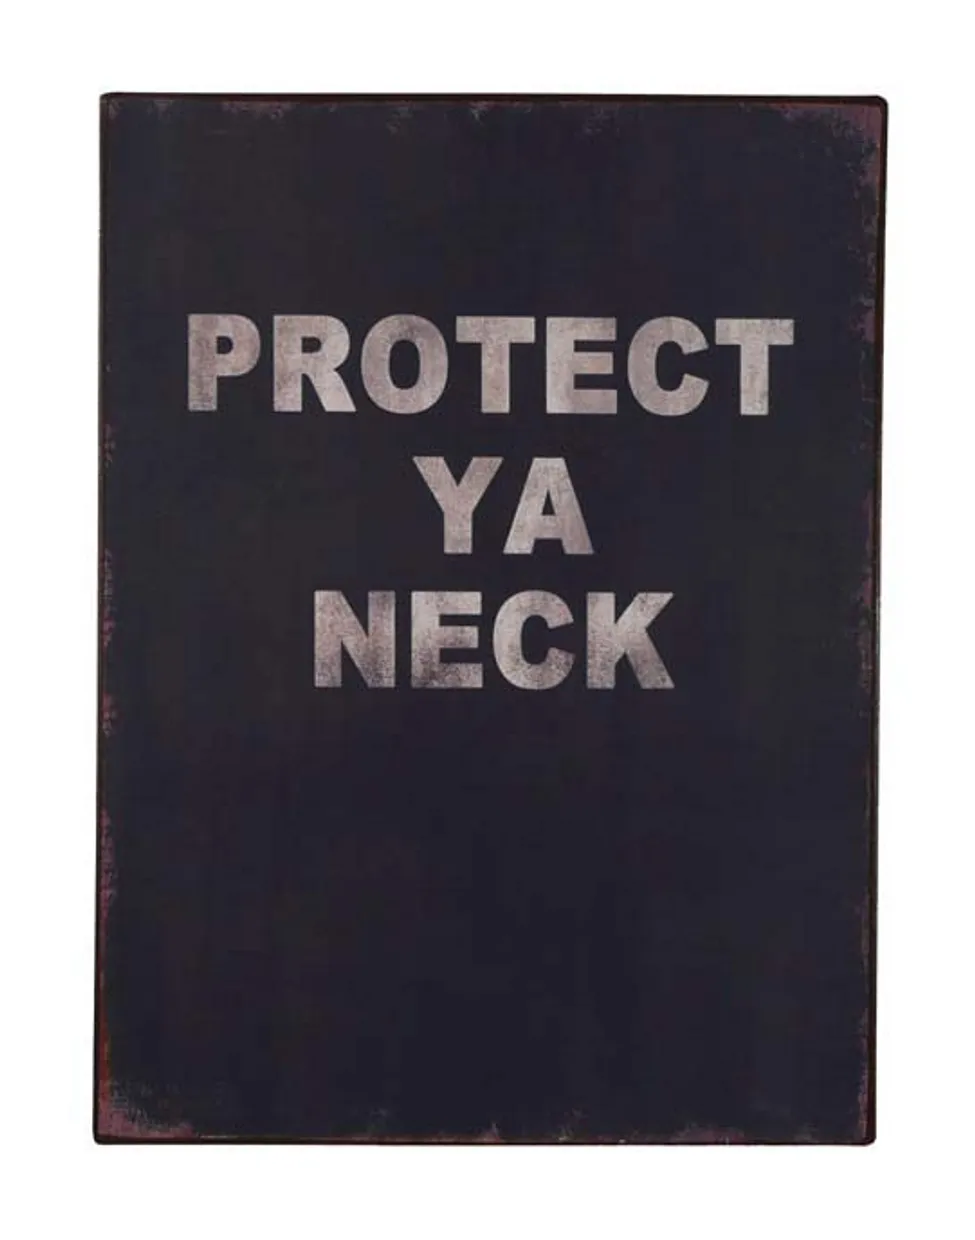 Tekstbord: "Protect ya neck"